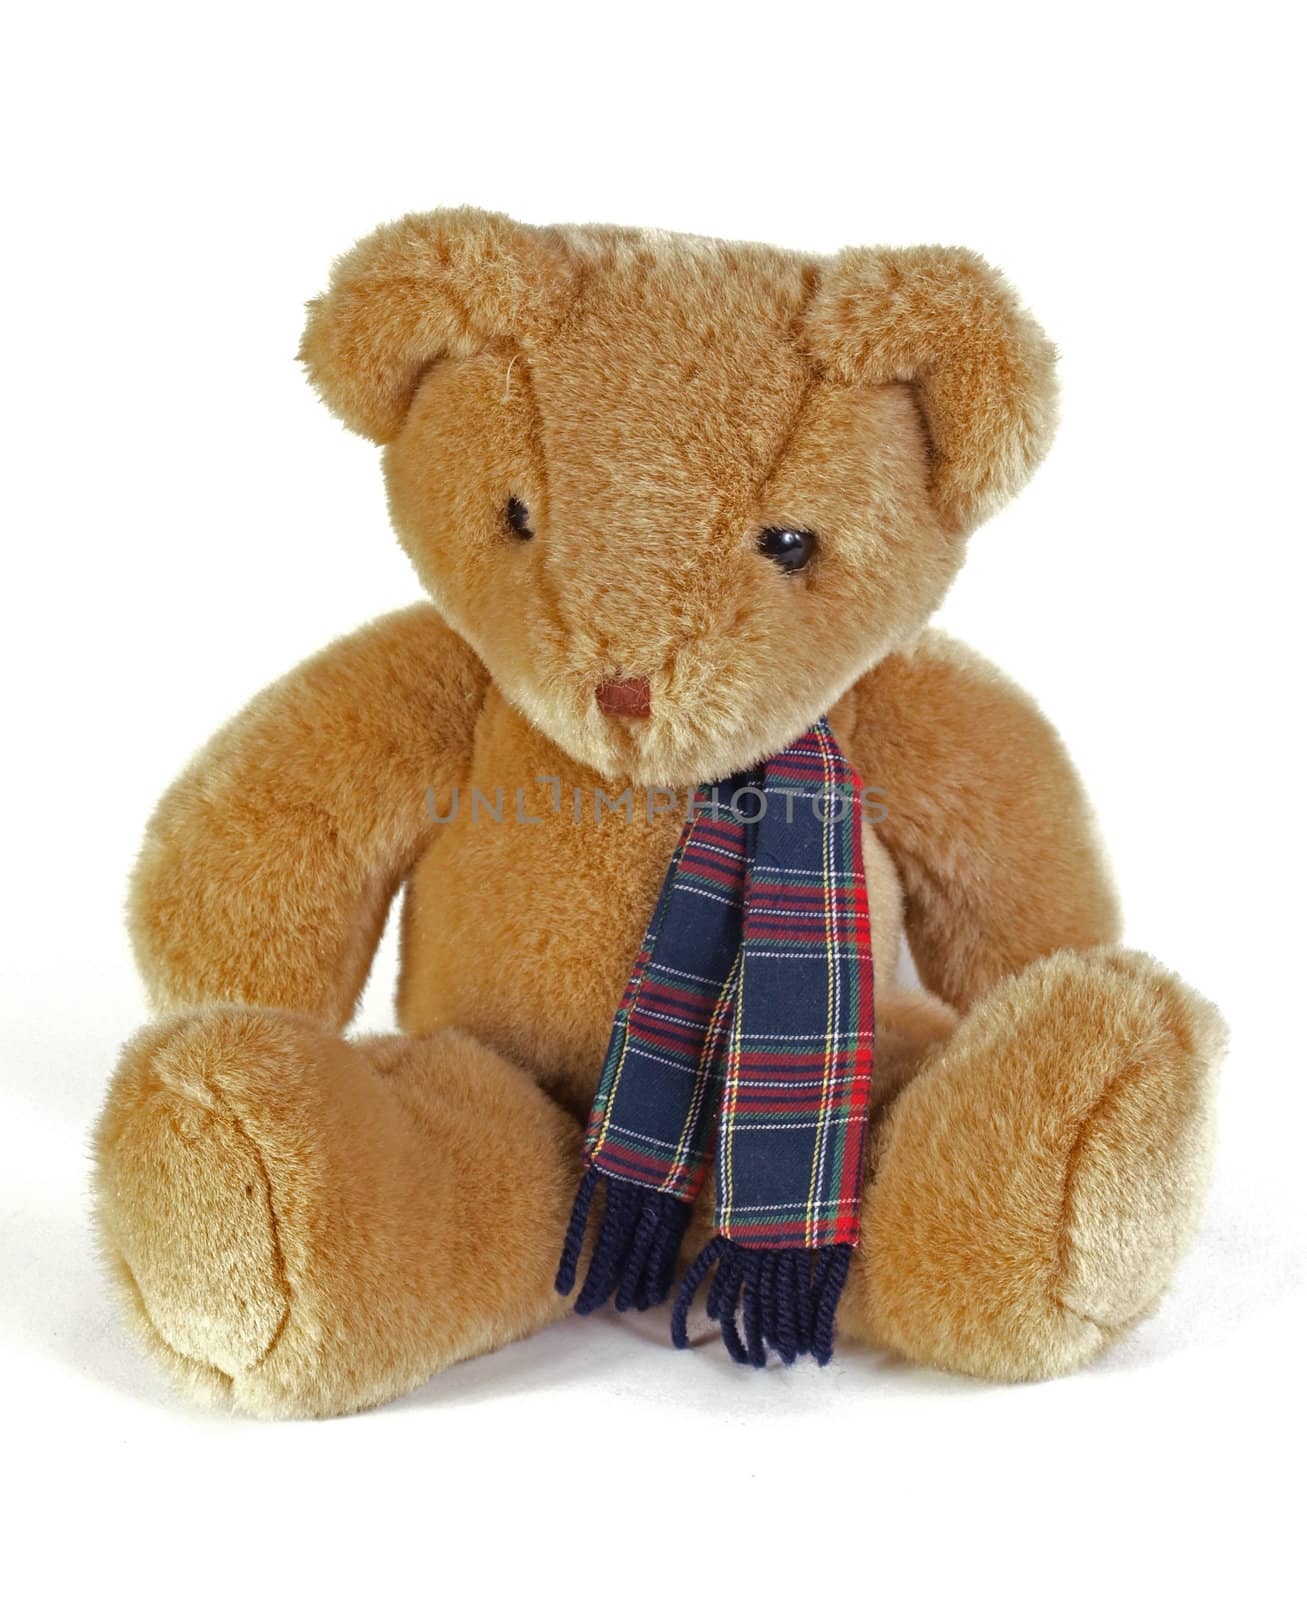 Teddy Bear with a tartan scaf on a white background.